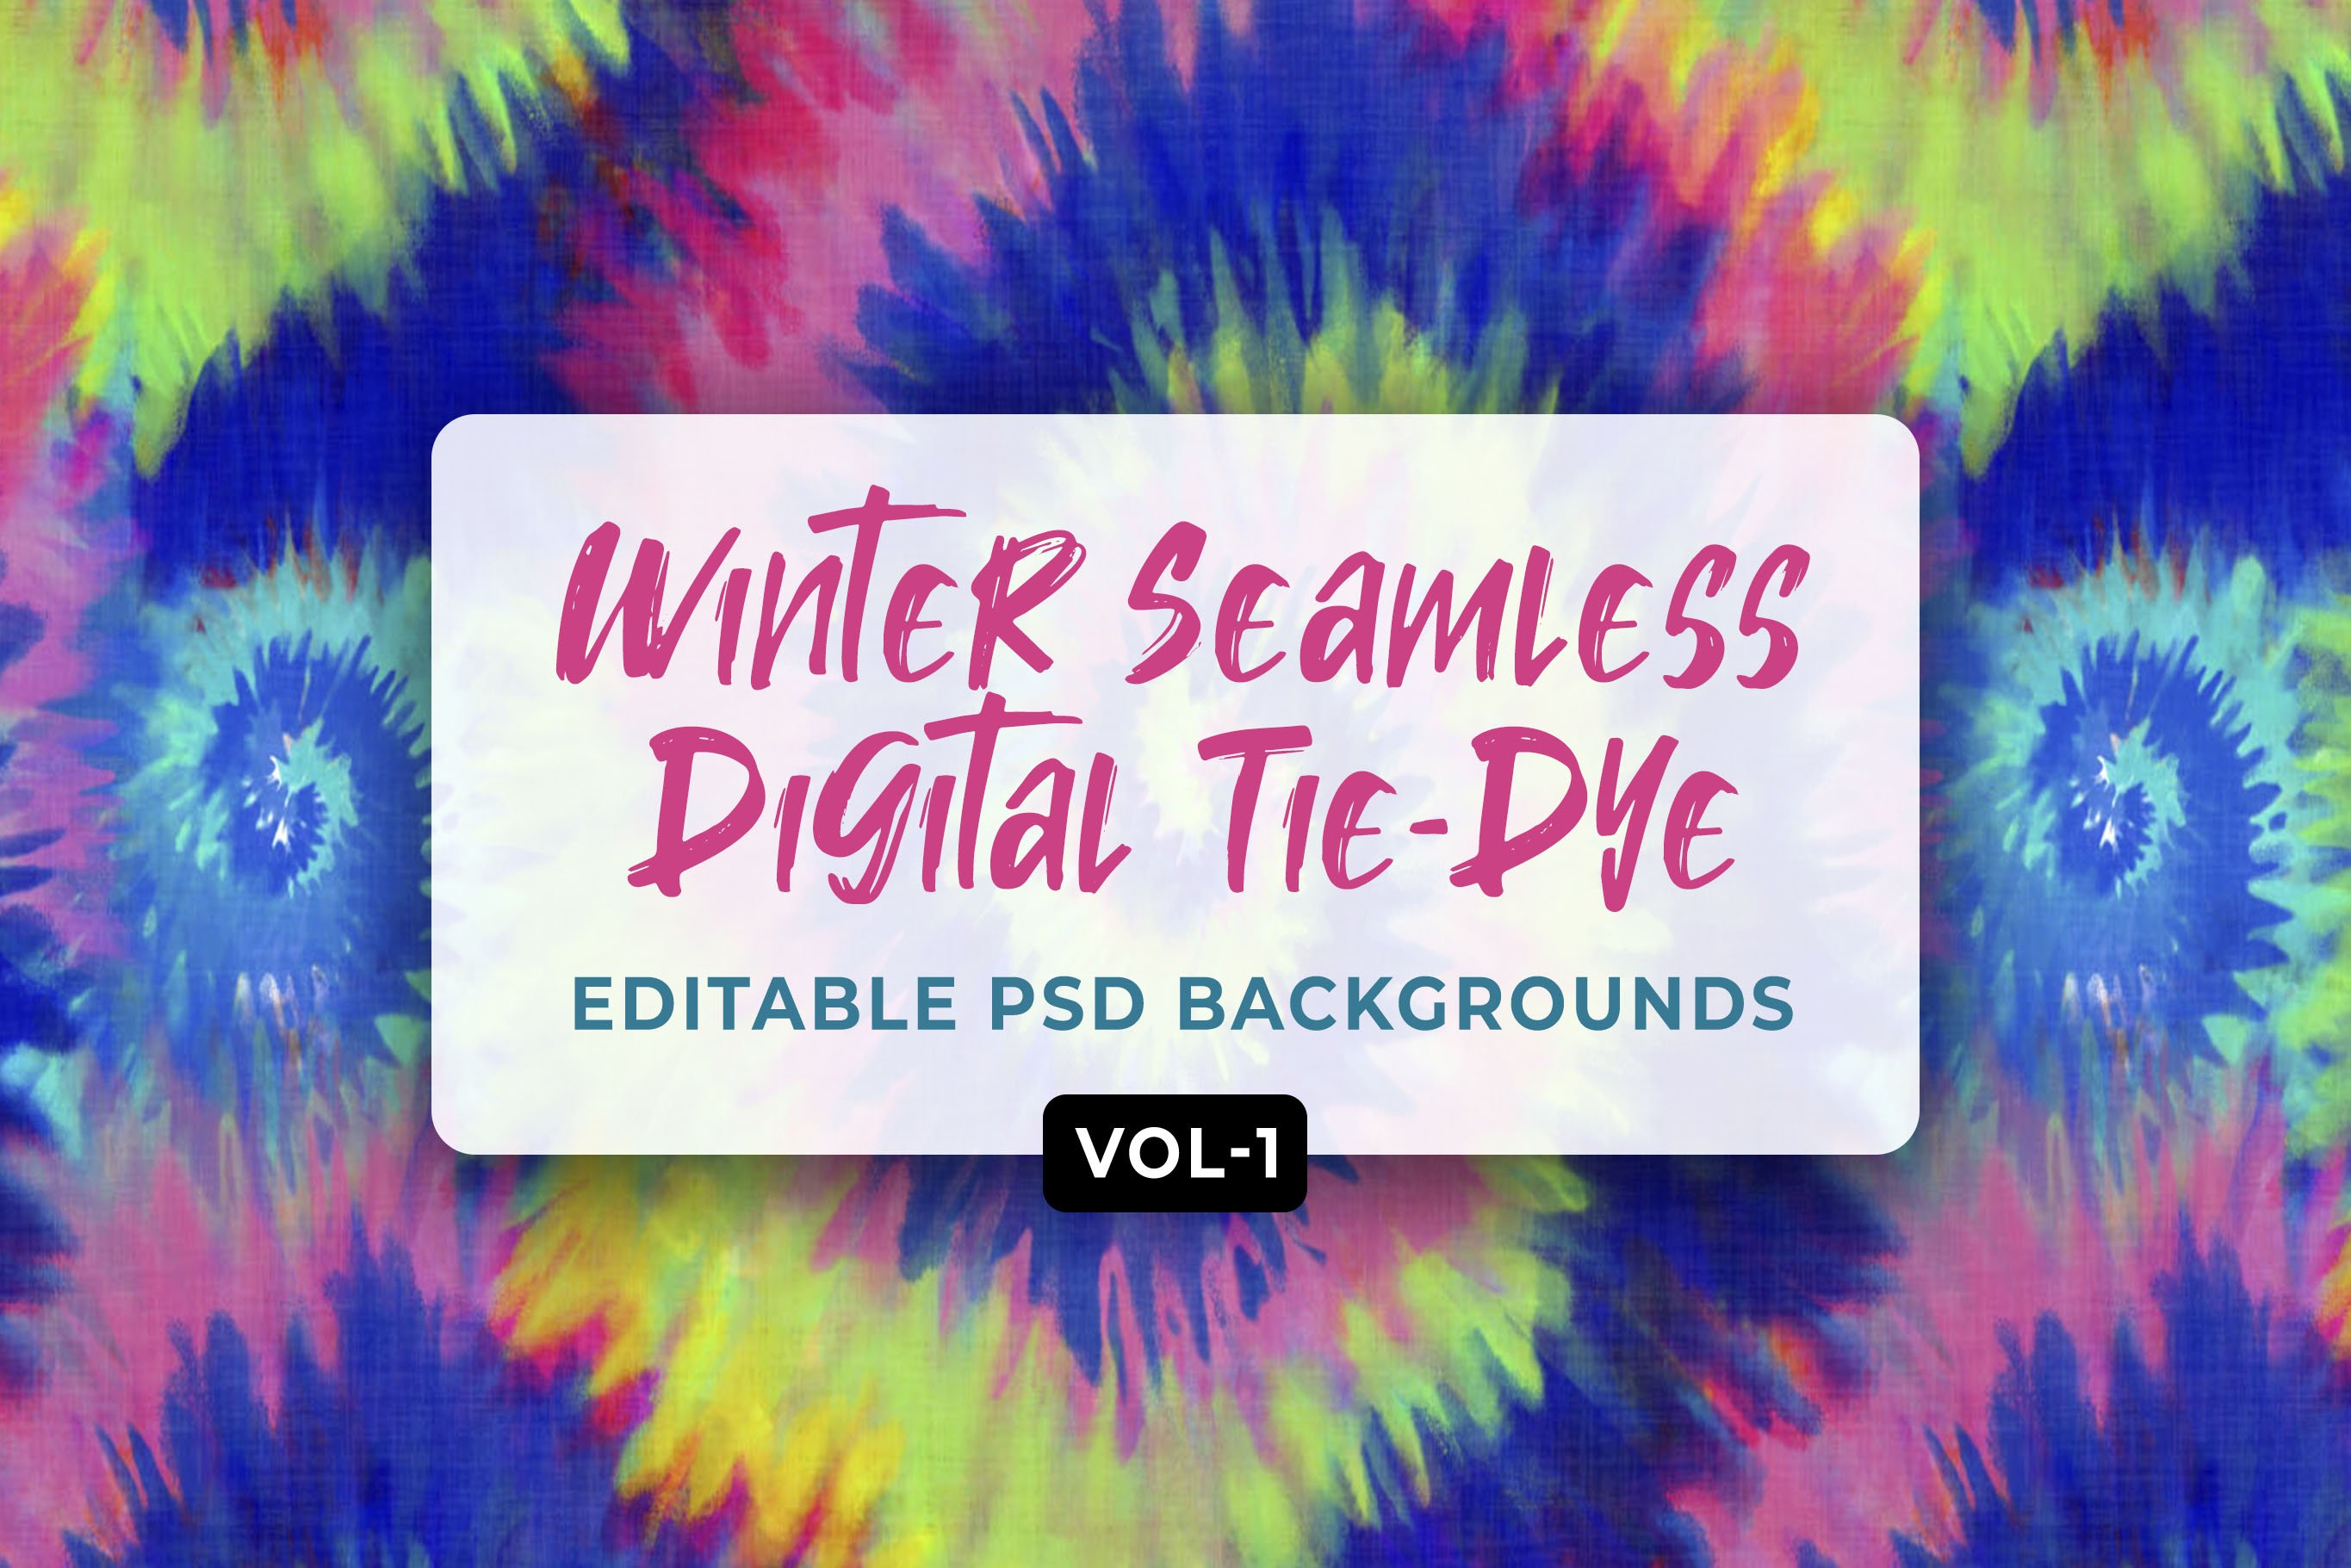 Winter Seamless Digital Tie-Dye cover image.